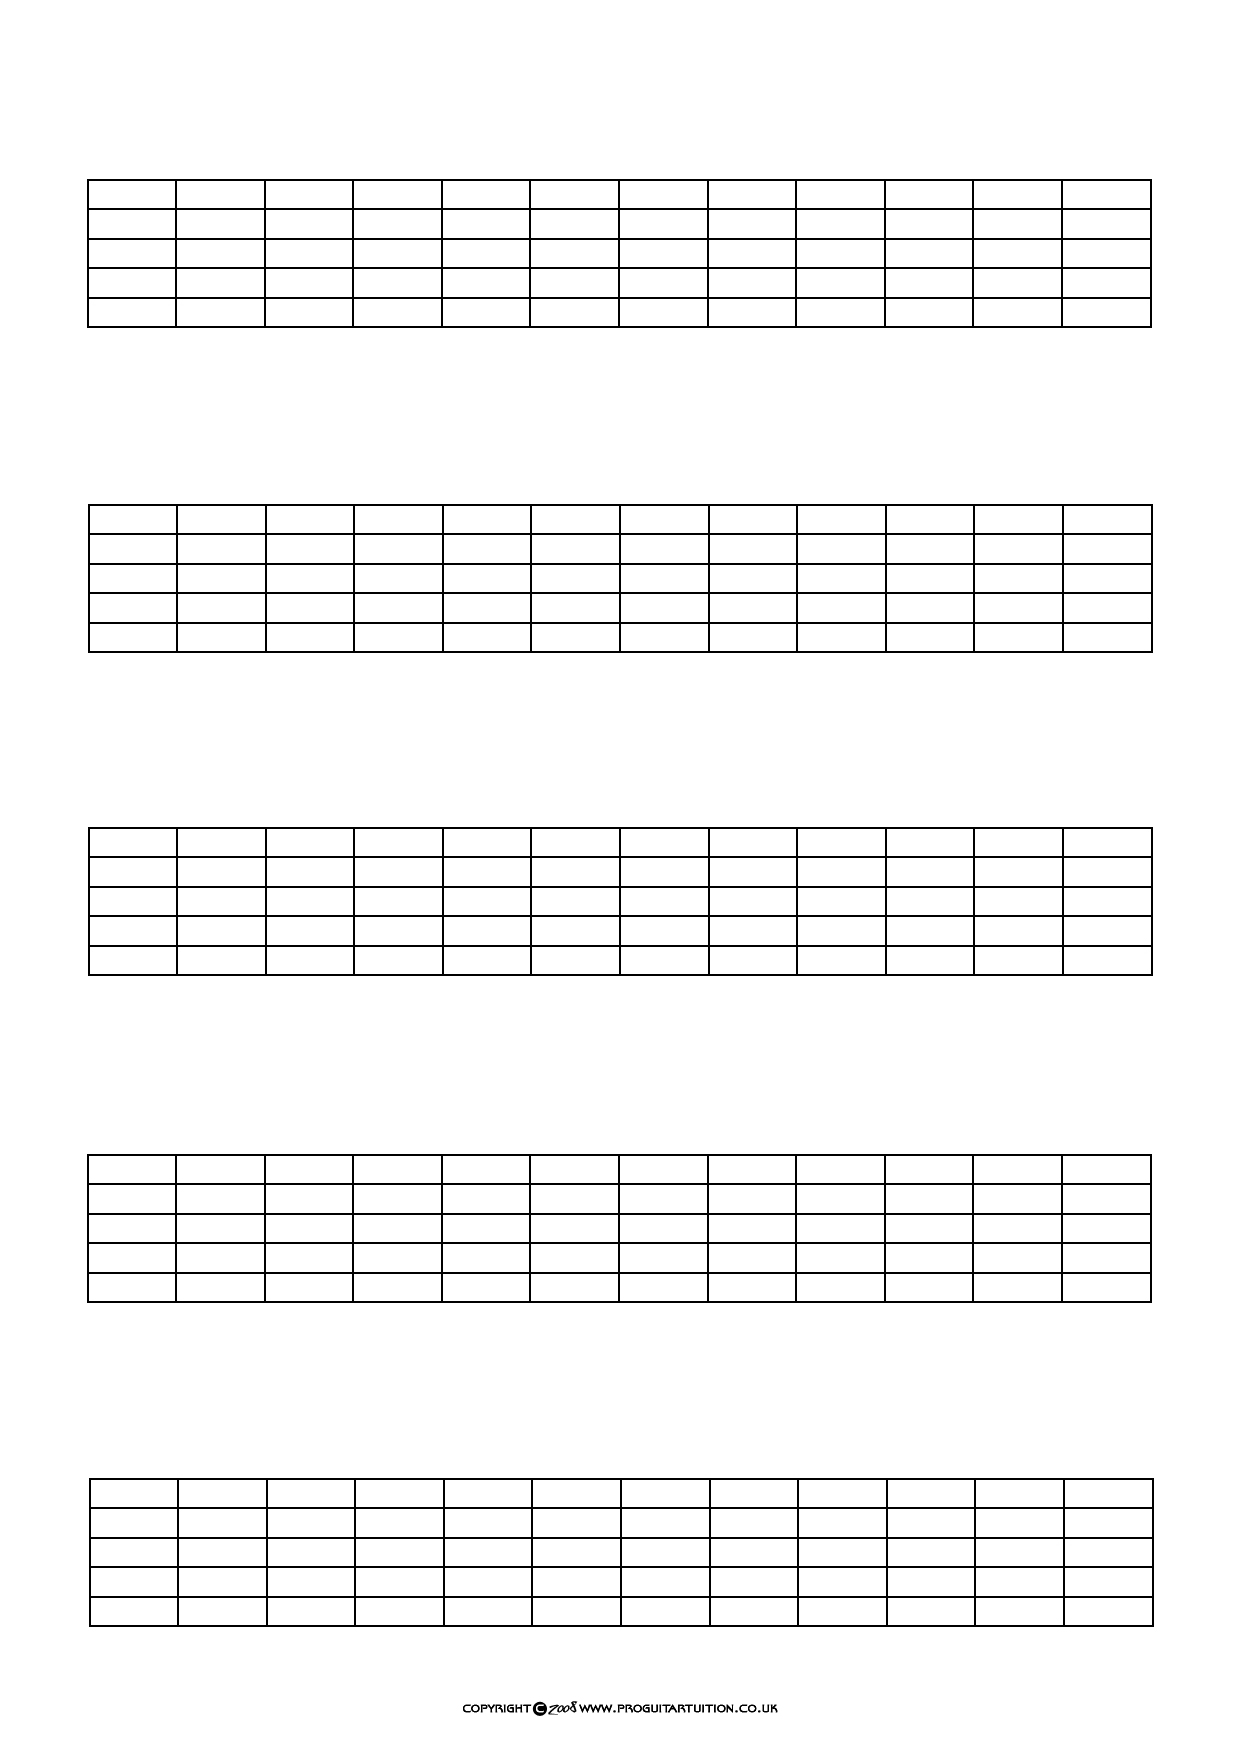 Guitar Neck Diagrams (12 Frets. 5 x Per Page)